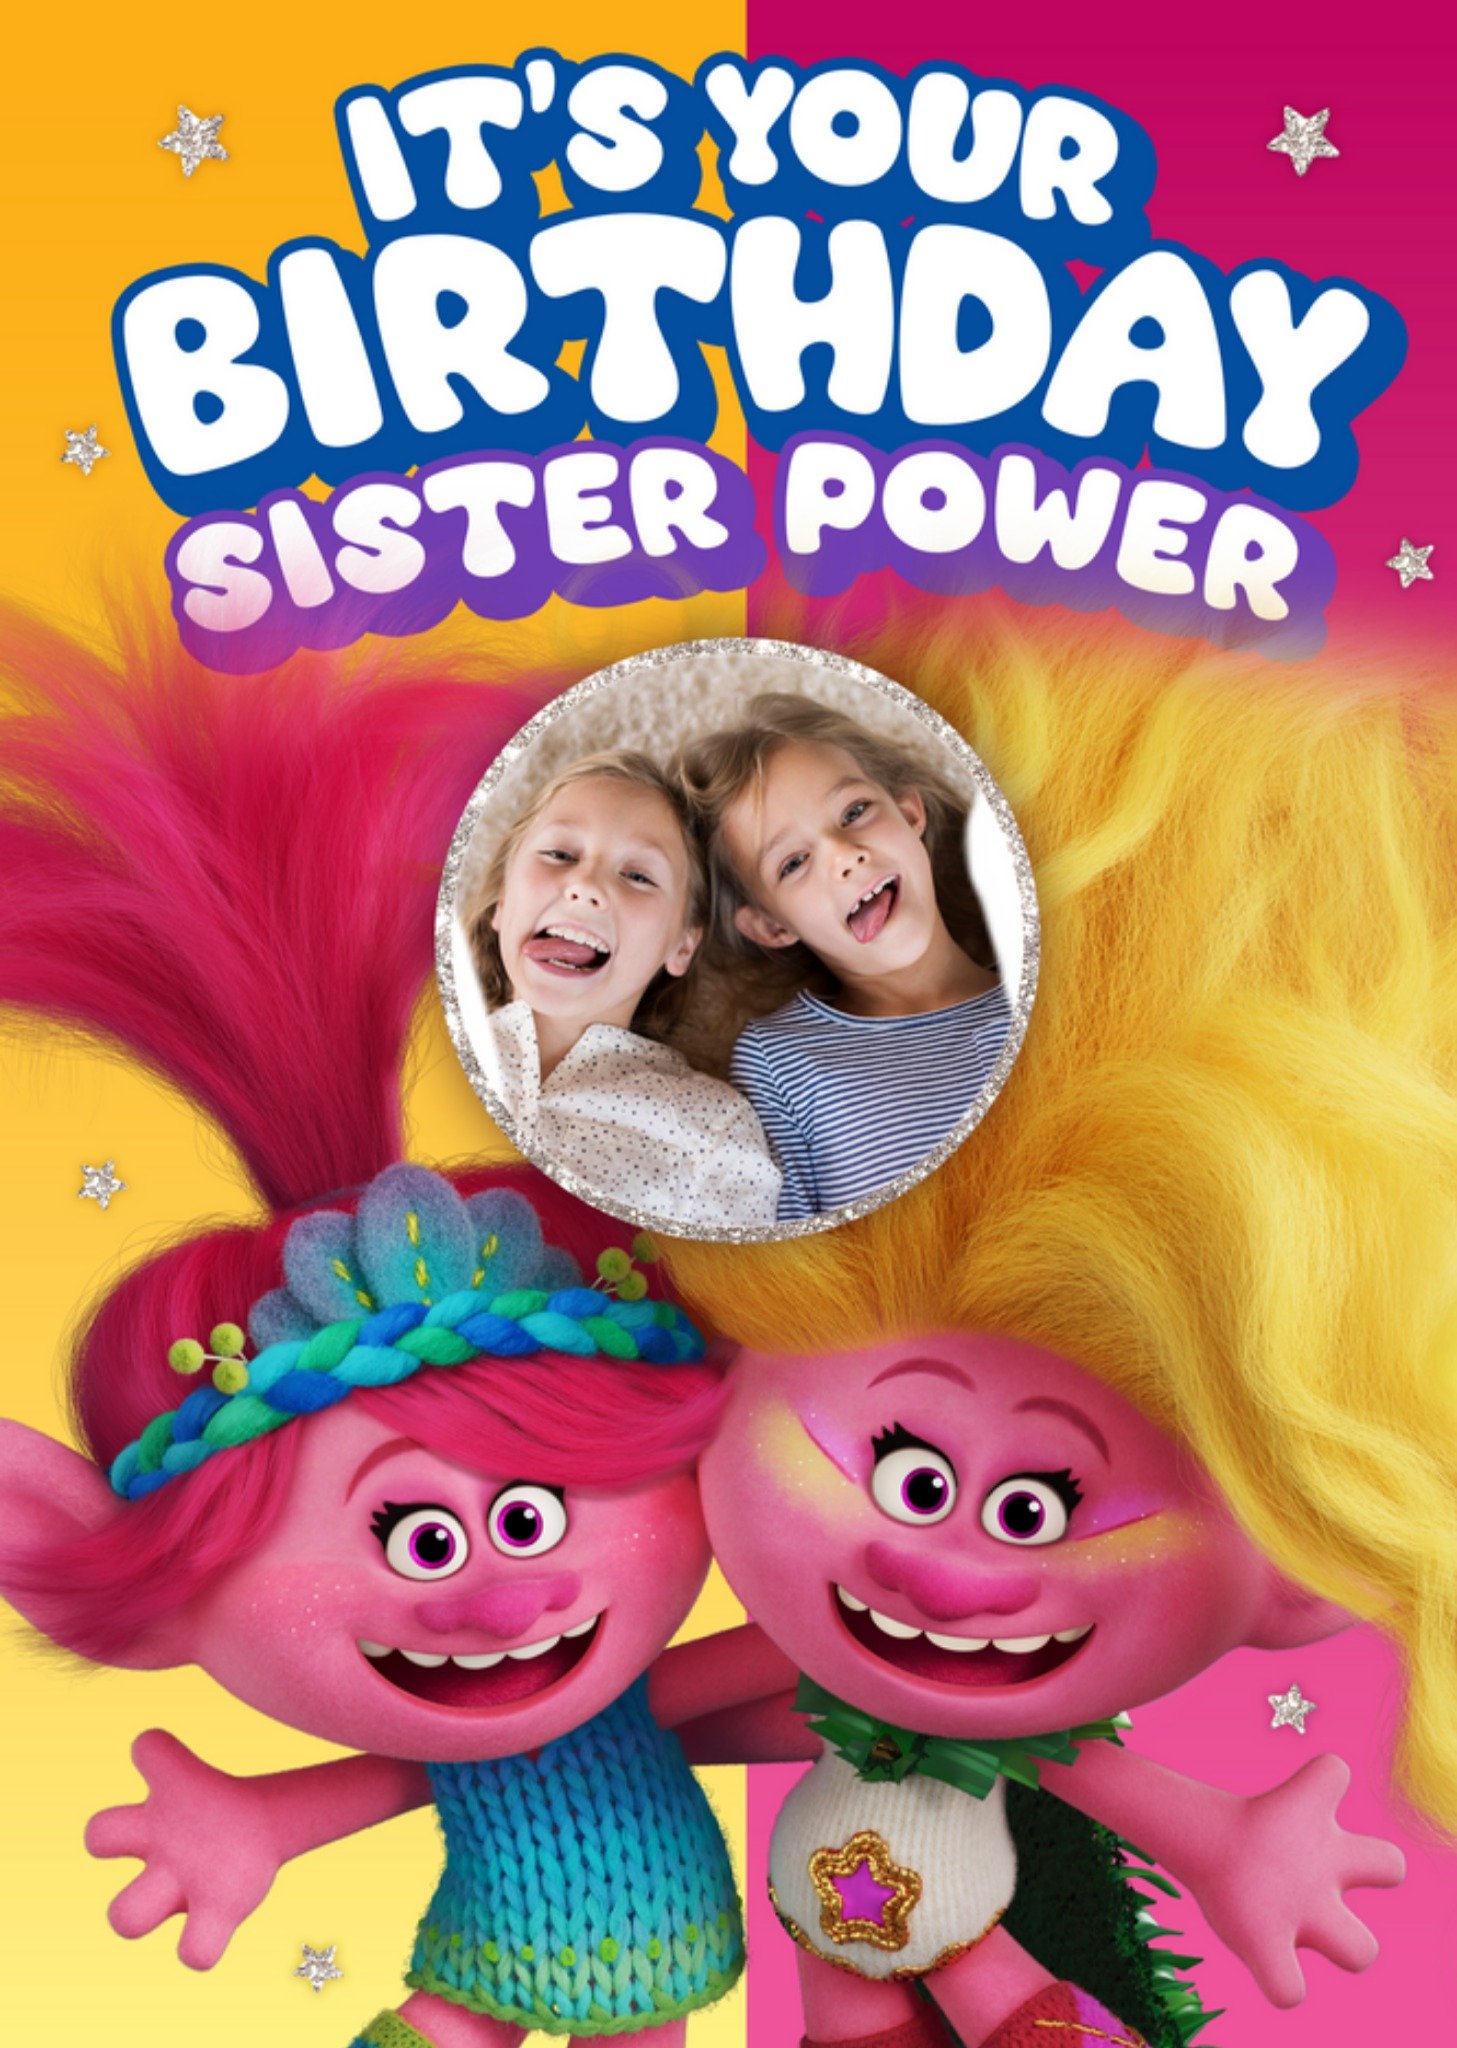 Trolls Sister Power Photo Upload Birthday Card, Large